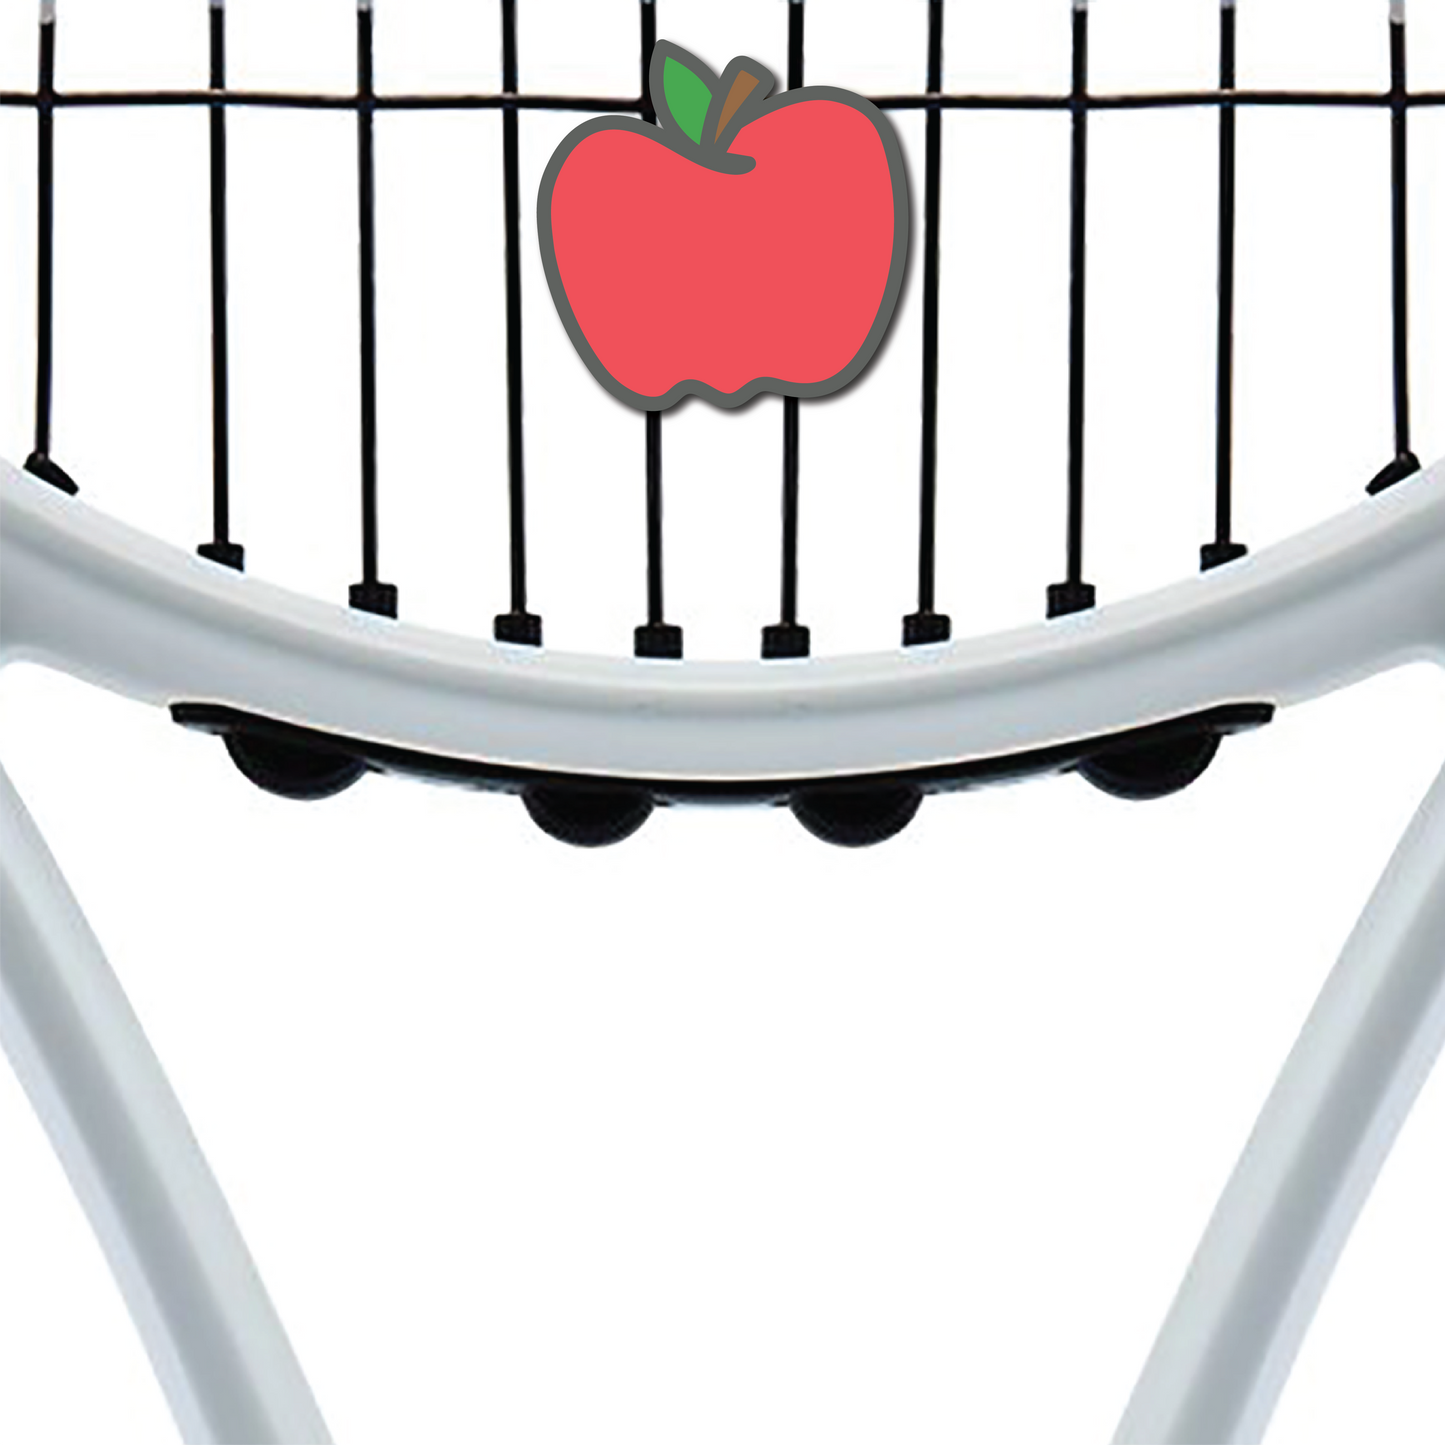 Apple Tennis Racquet Vibration Dampener